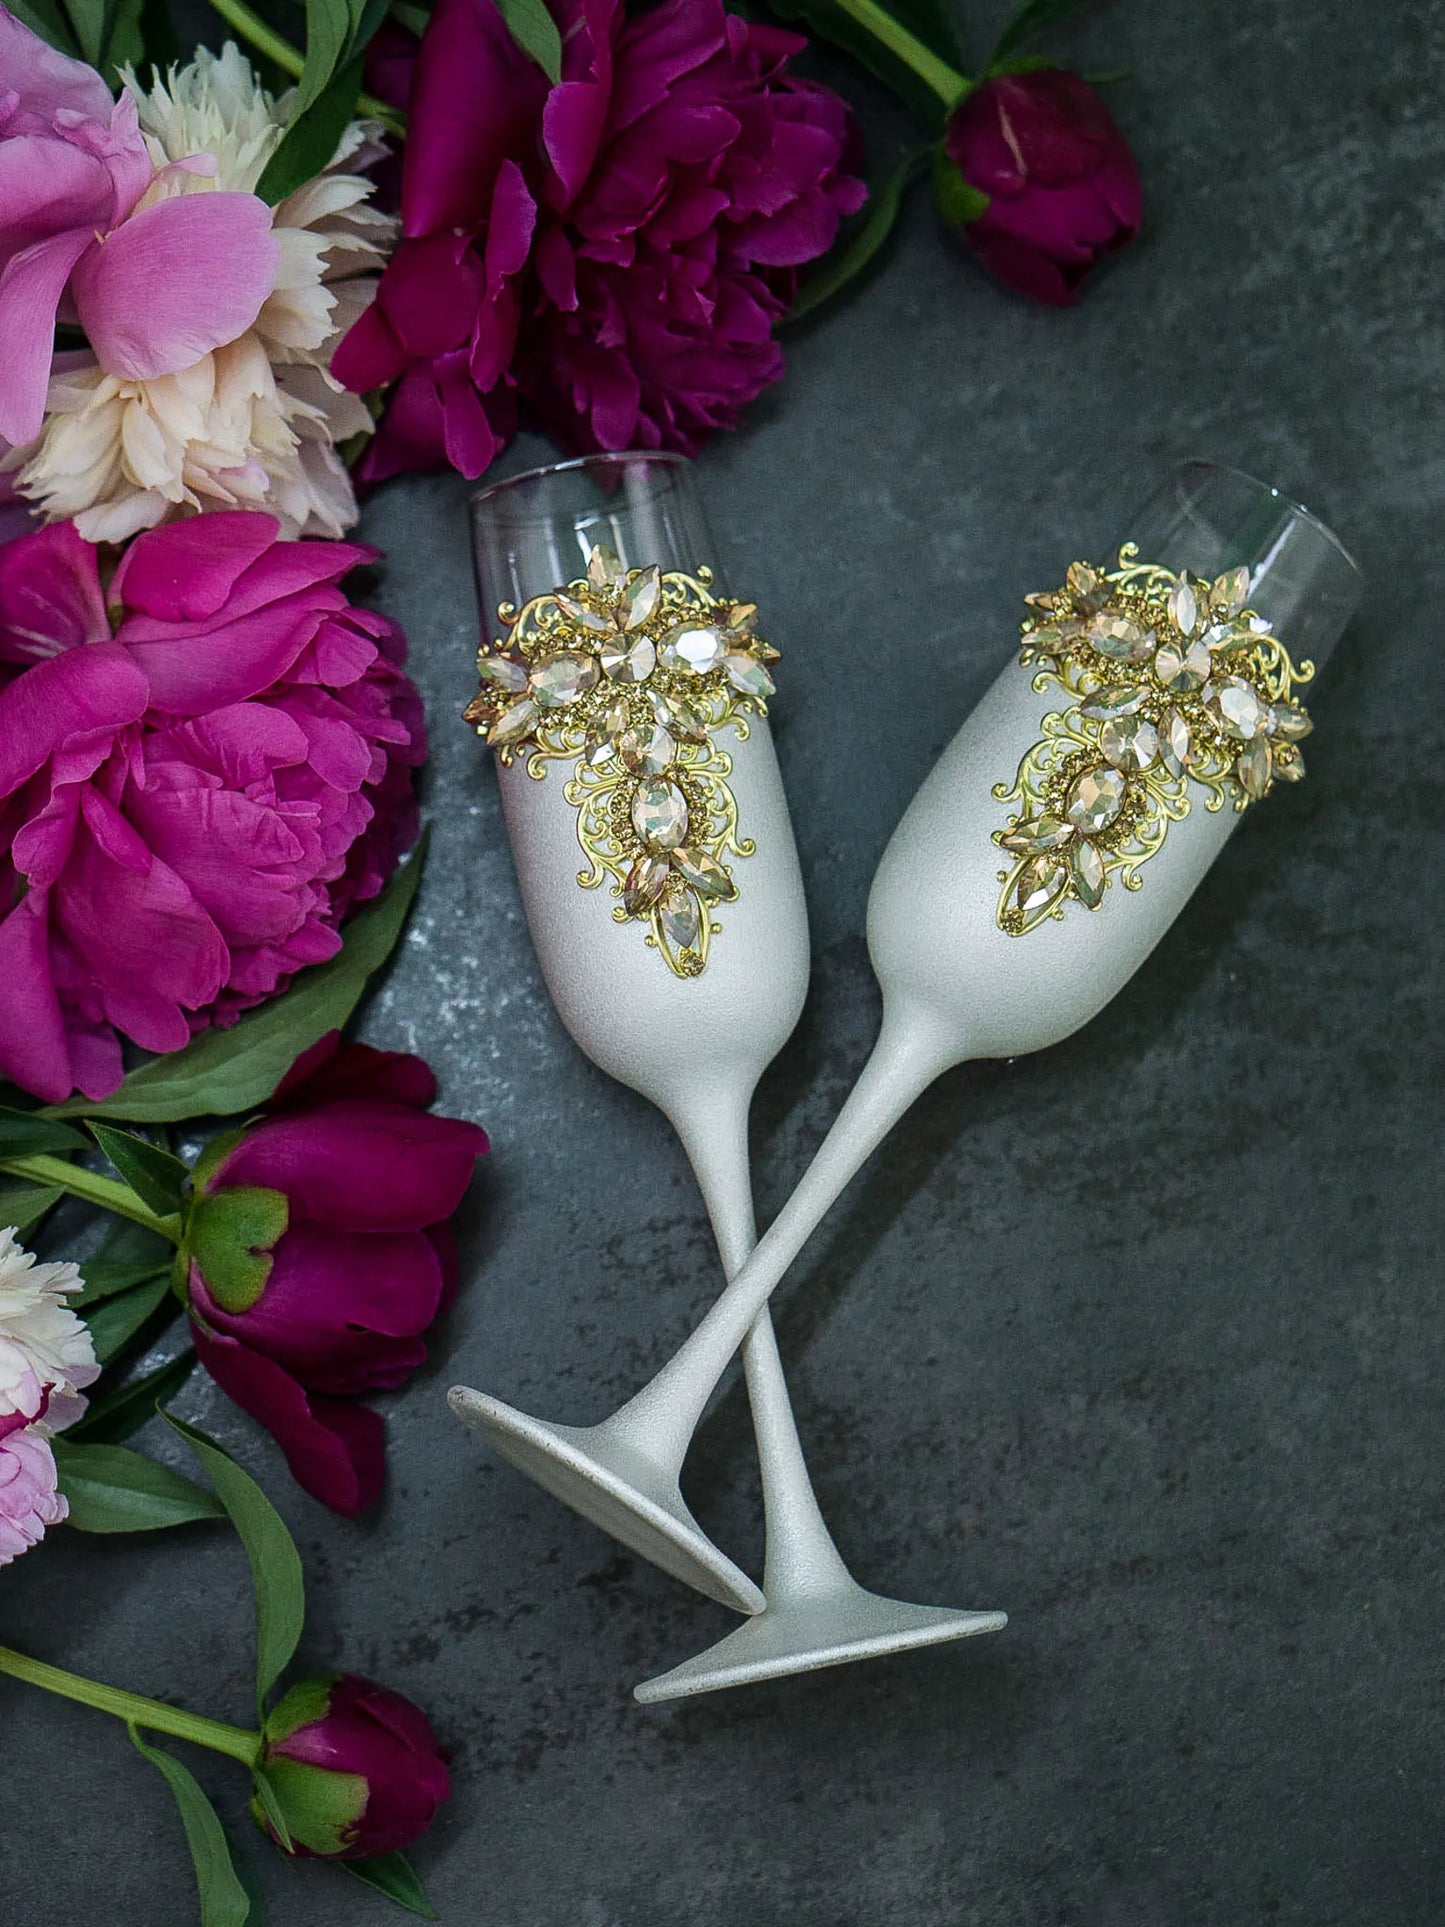 Engraved Gold and White Wedding Toasting Flutes | Gloria